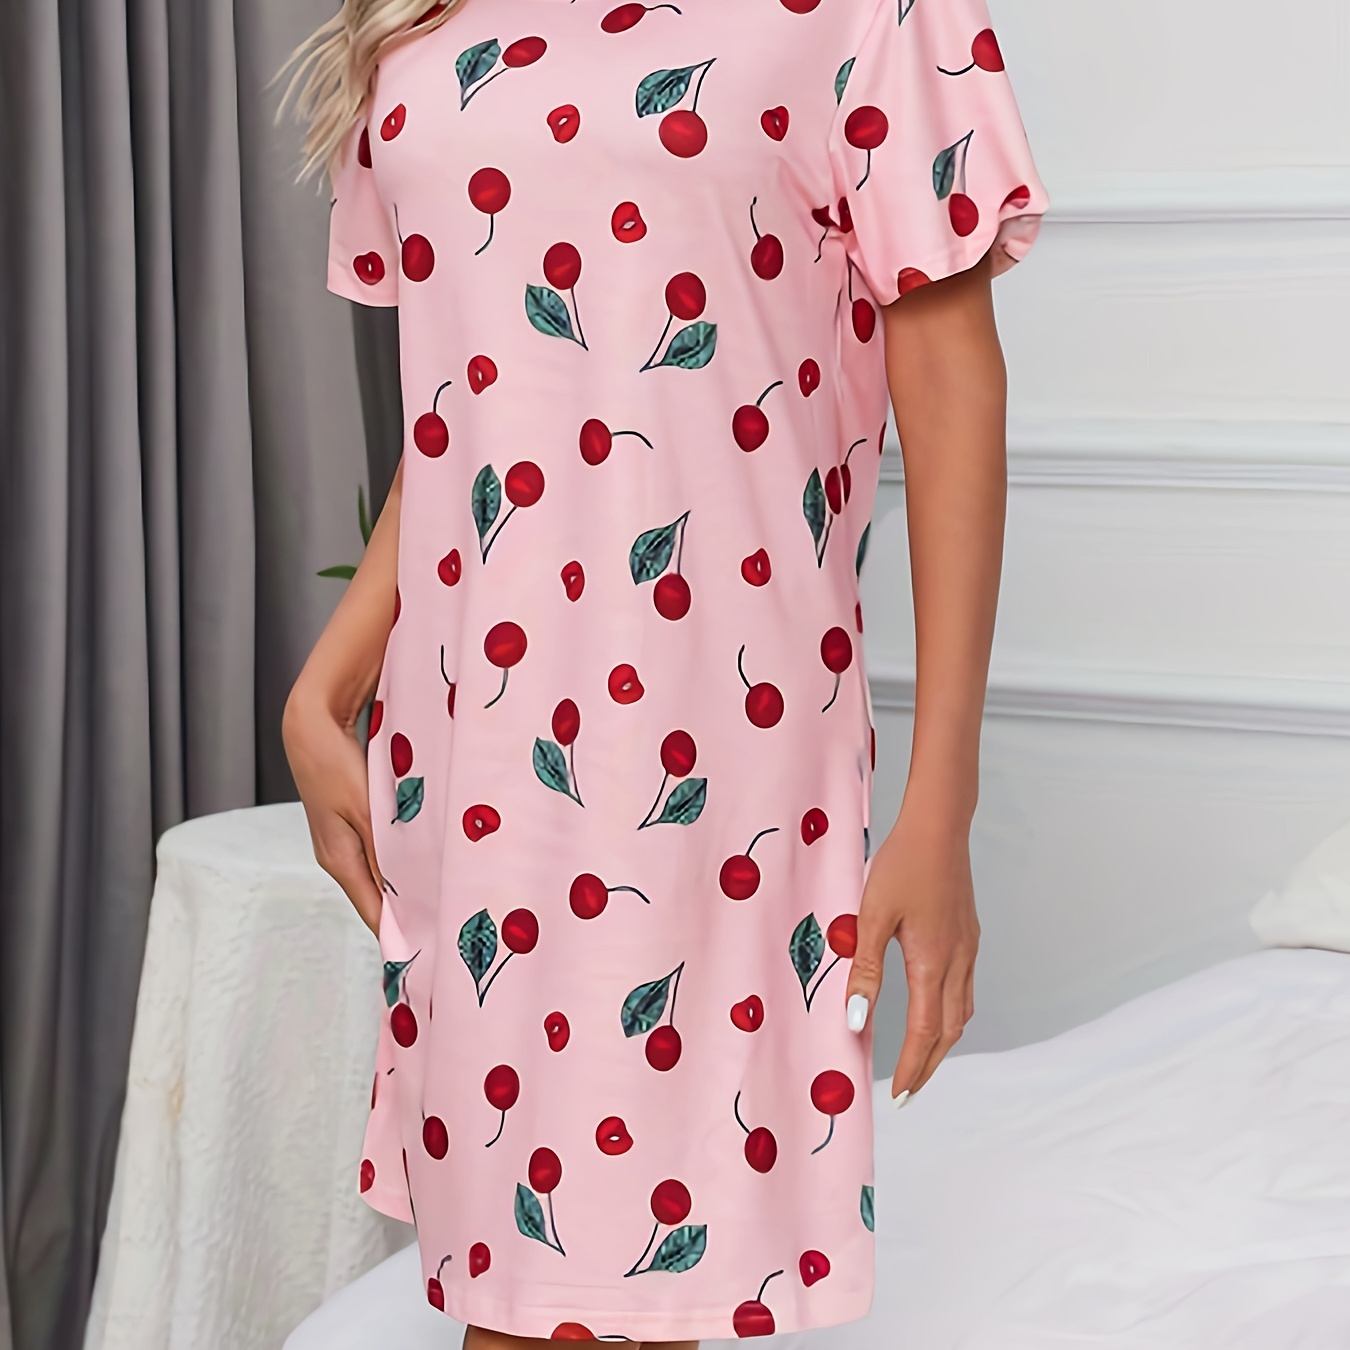 

Cherry Print Nightgown, Casual Short Sleeve Round Neck Loose Fit Dress, Women's Sleepwear